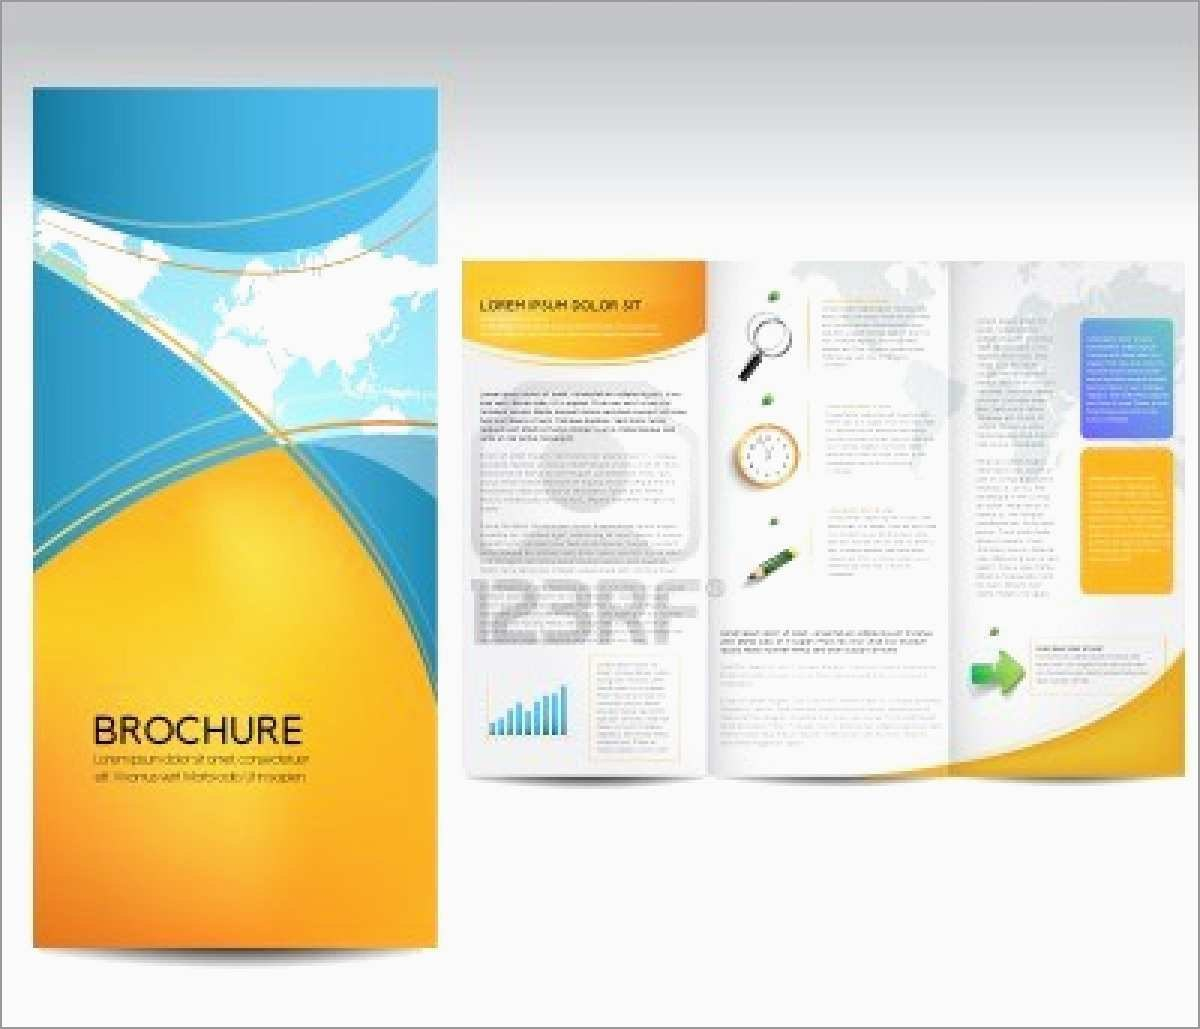 Elegant Brochure Layout Templates Free Download  Best Of Template regarding Free Brochure Template Downloads